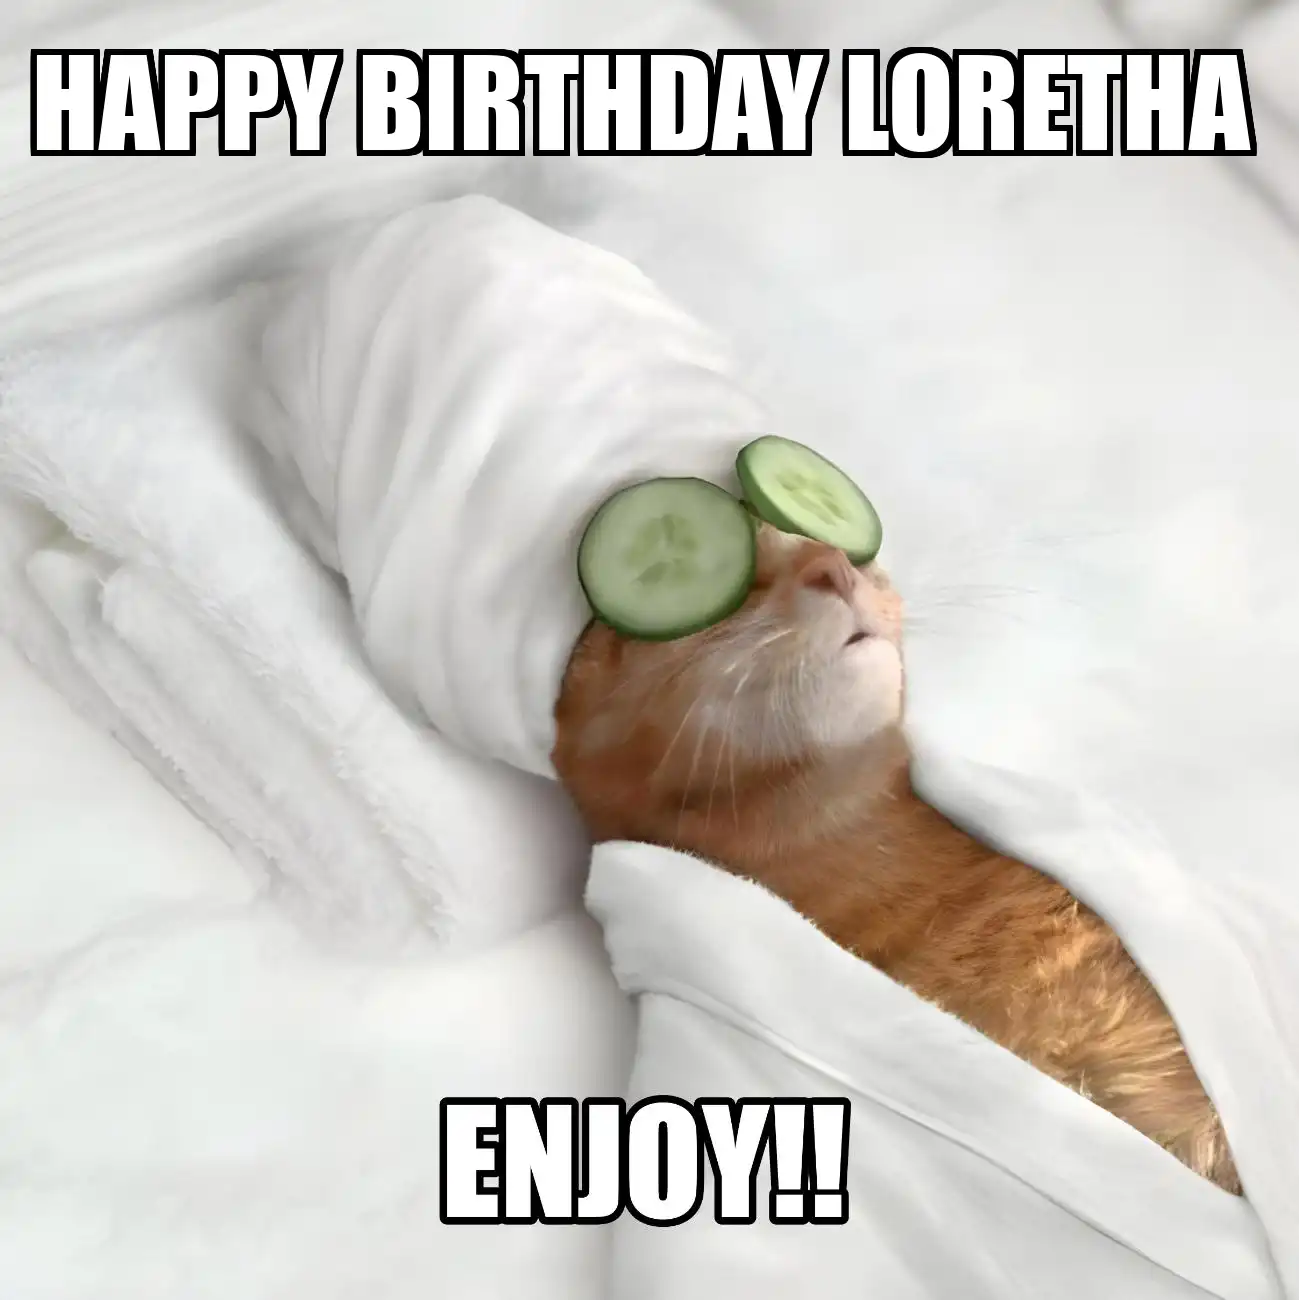 Happy Birthday Loretha Enjoy Cat Meme